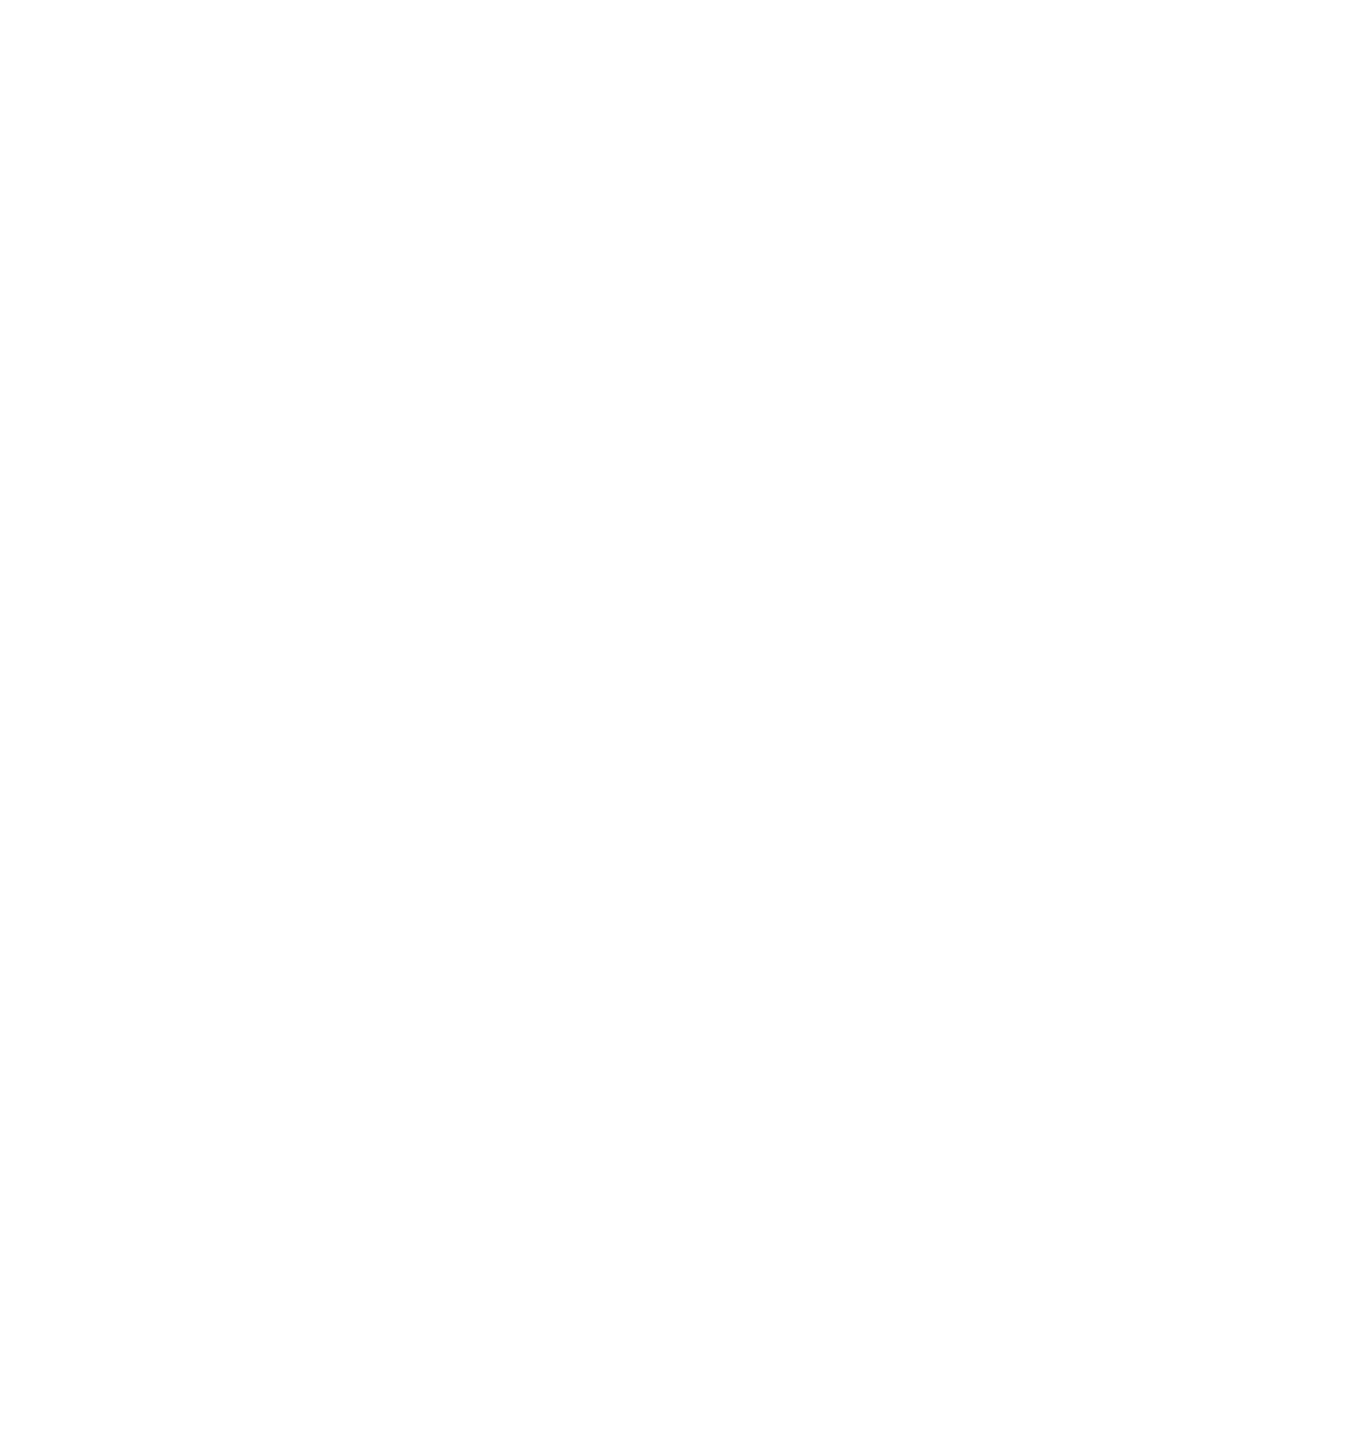 The Slinky Story